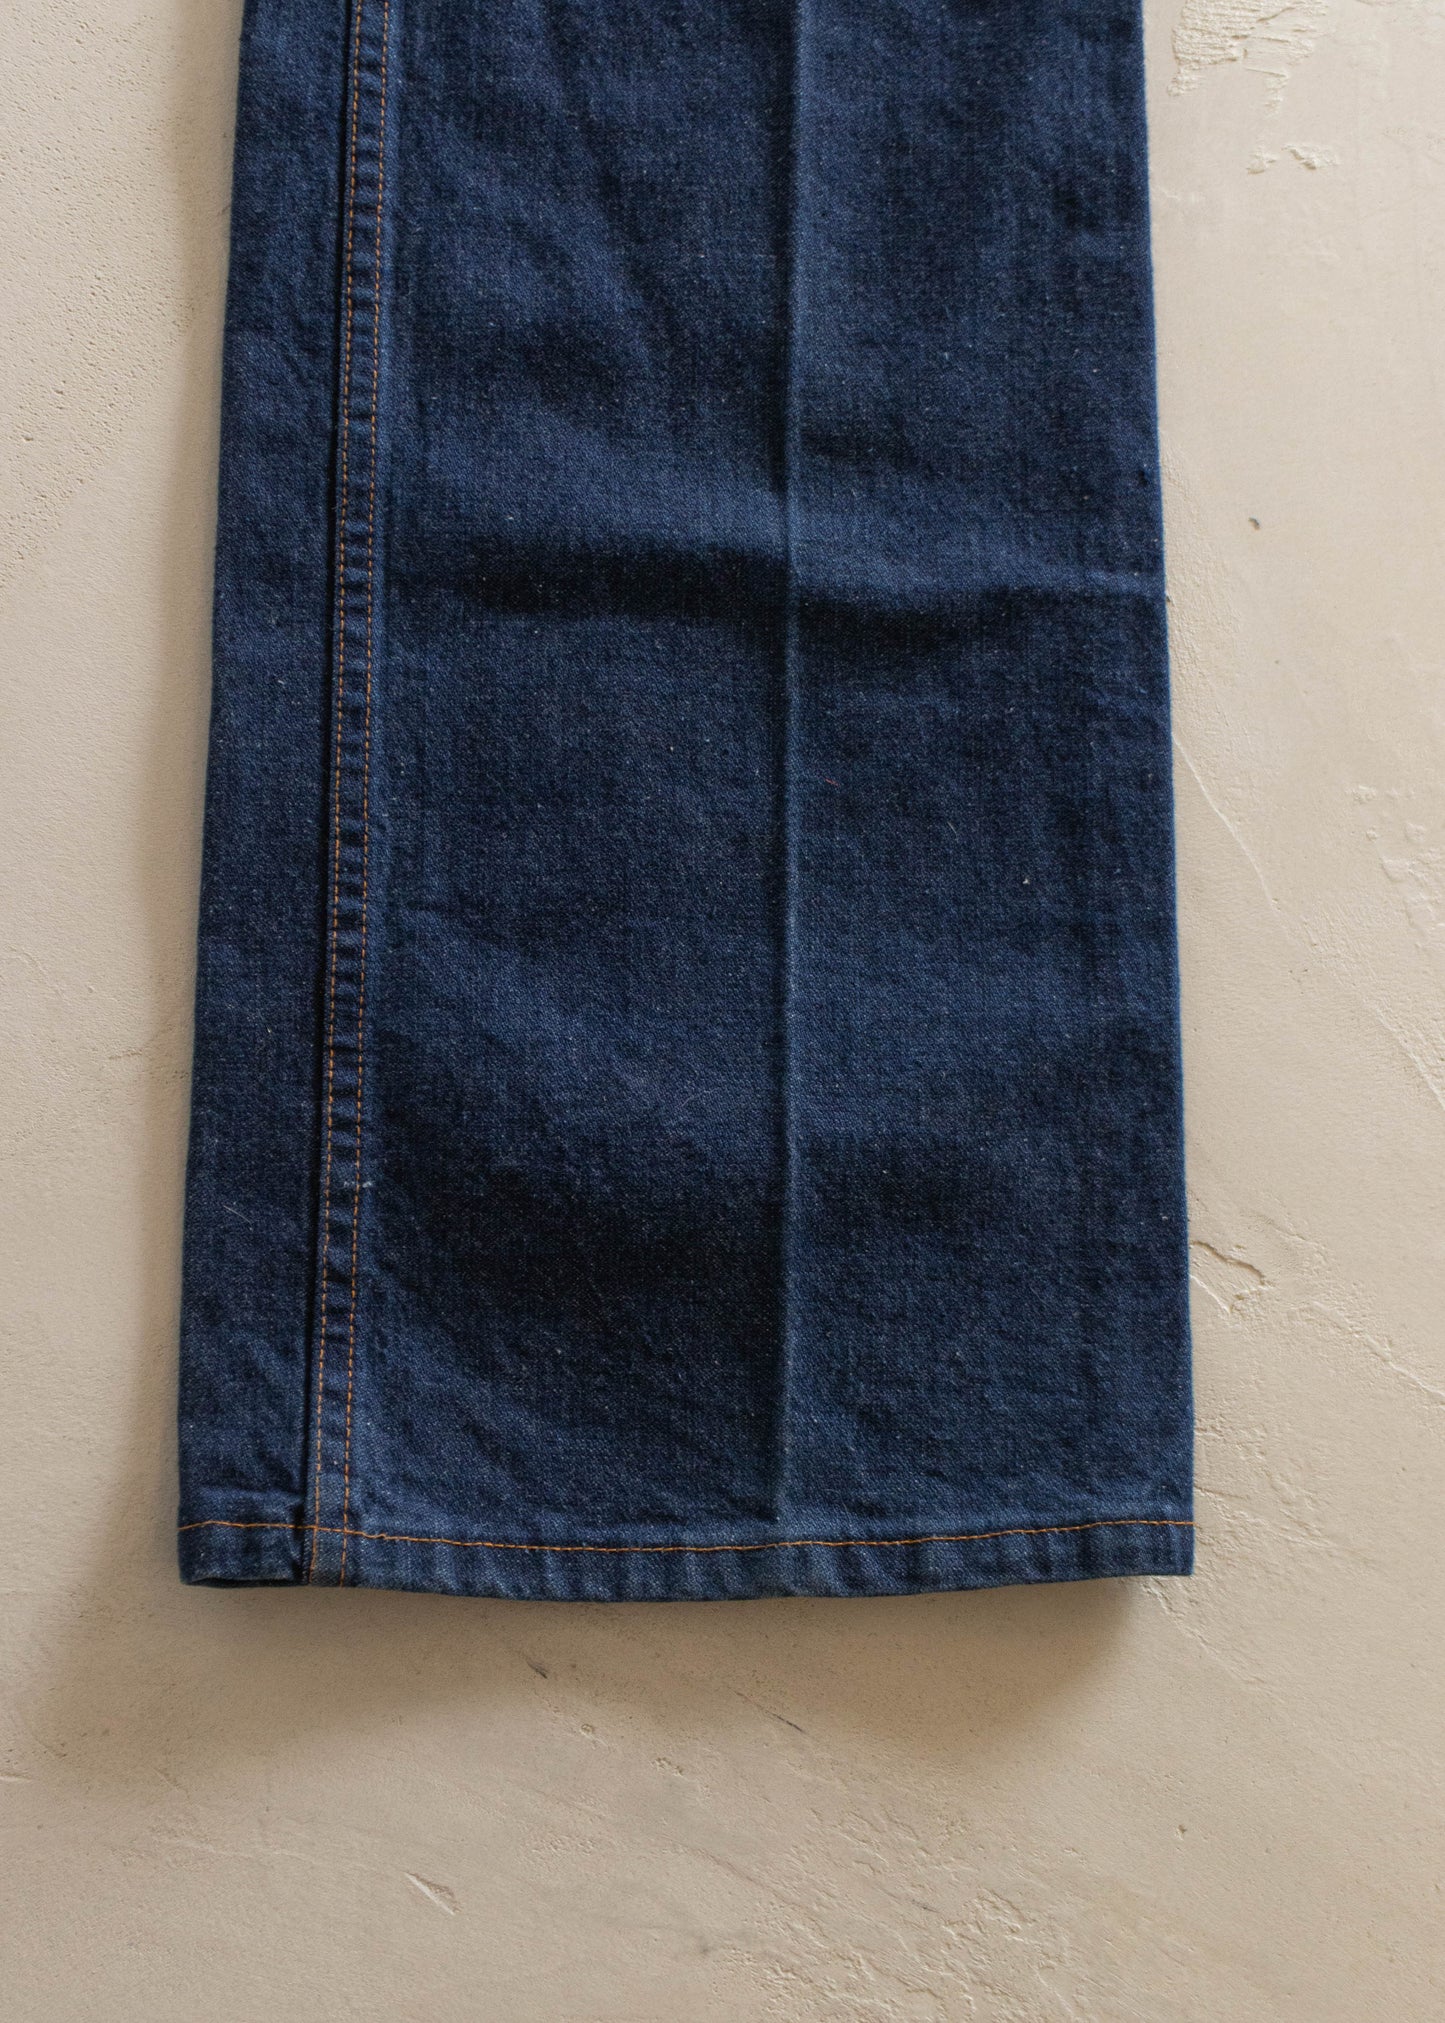 1970s Just Jeans Darkwash Flare Jeans Size Women's 24 Men's 28